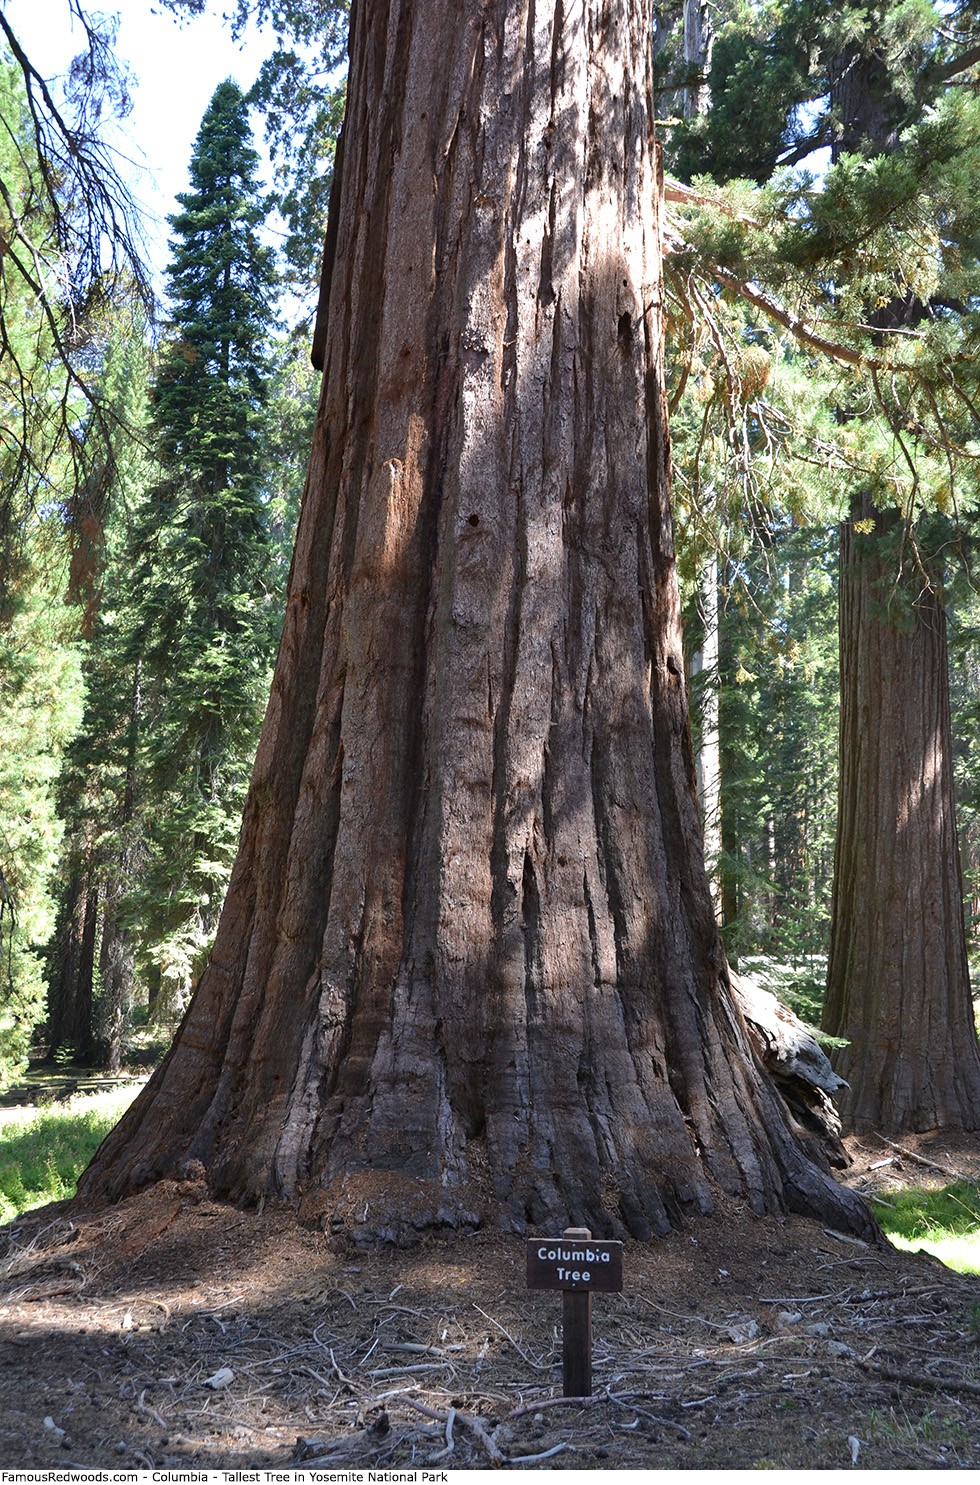 Mariposa Grove - Columnbia Tree